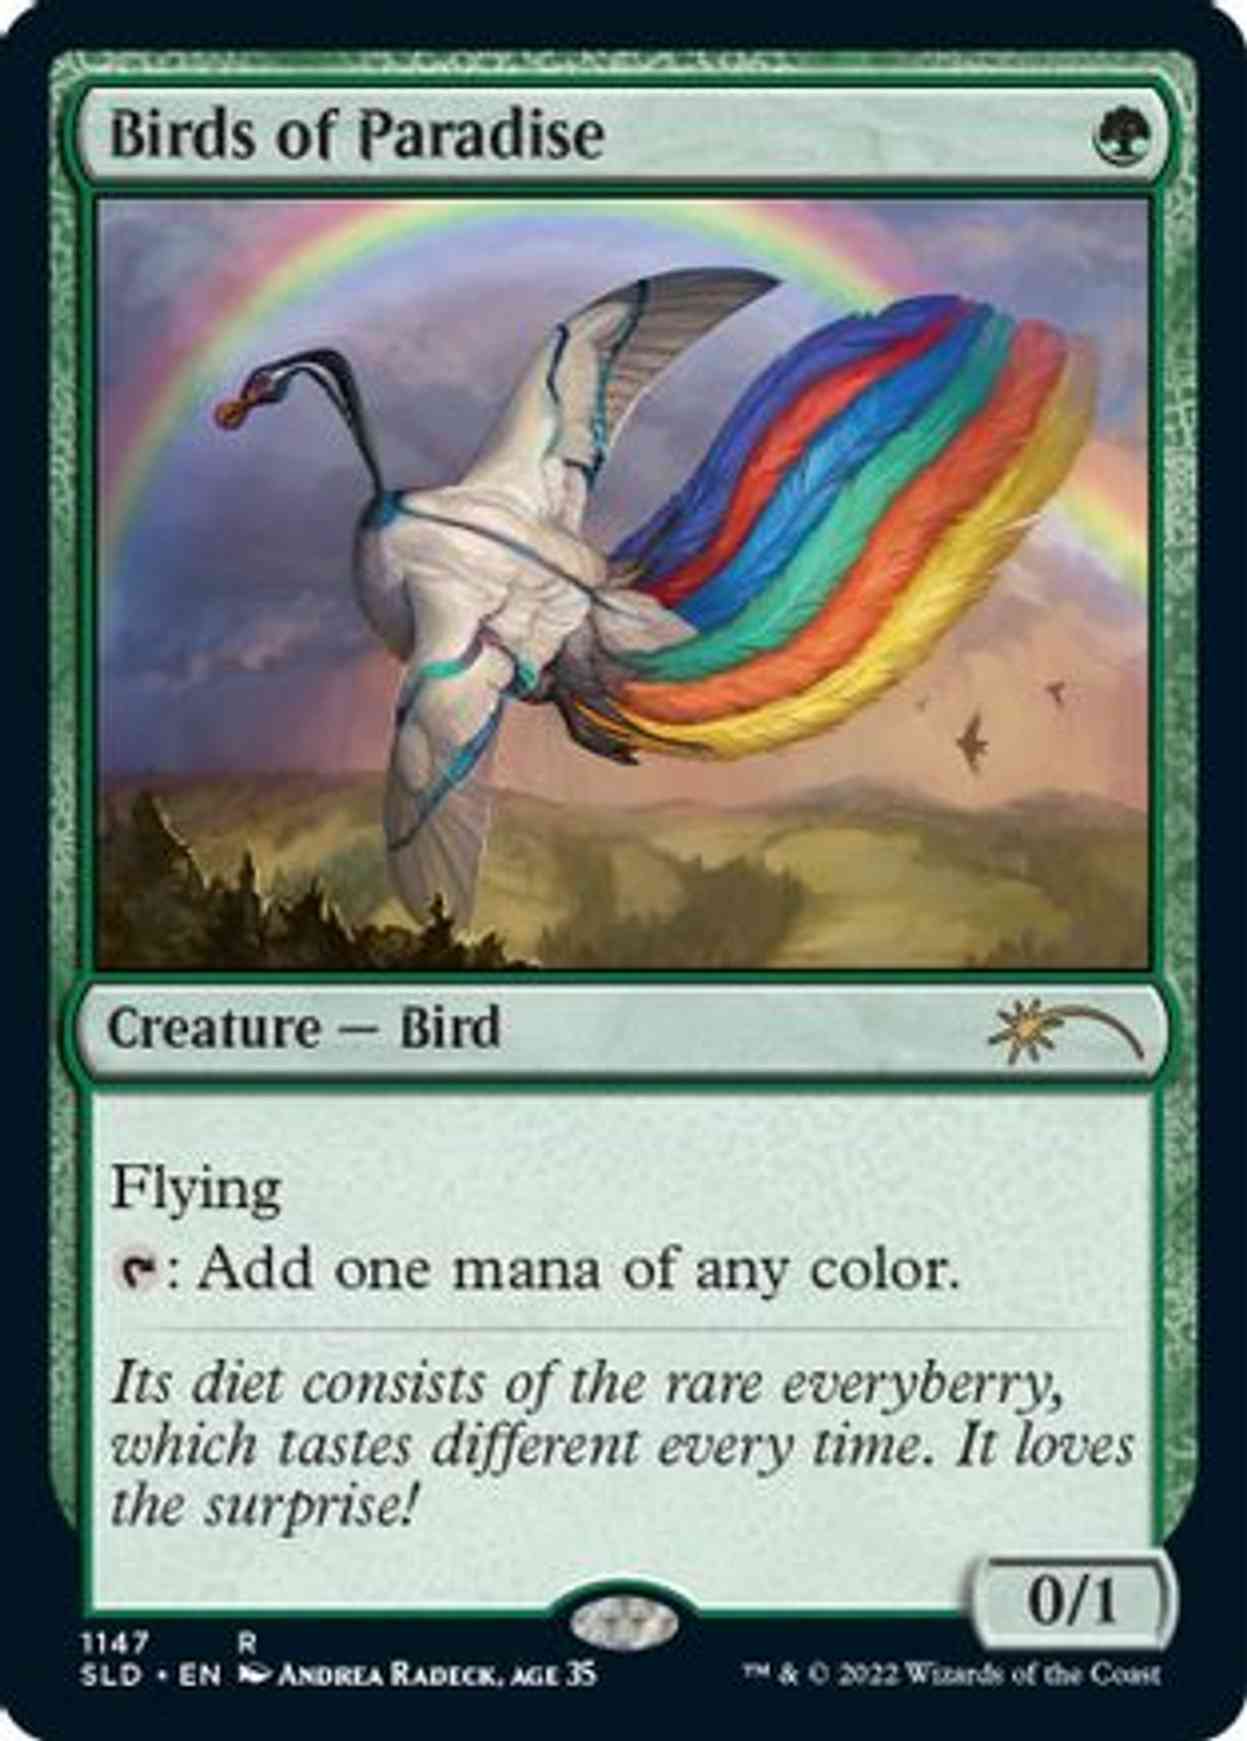 Birds of Paradise (1147) magic card front